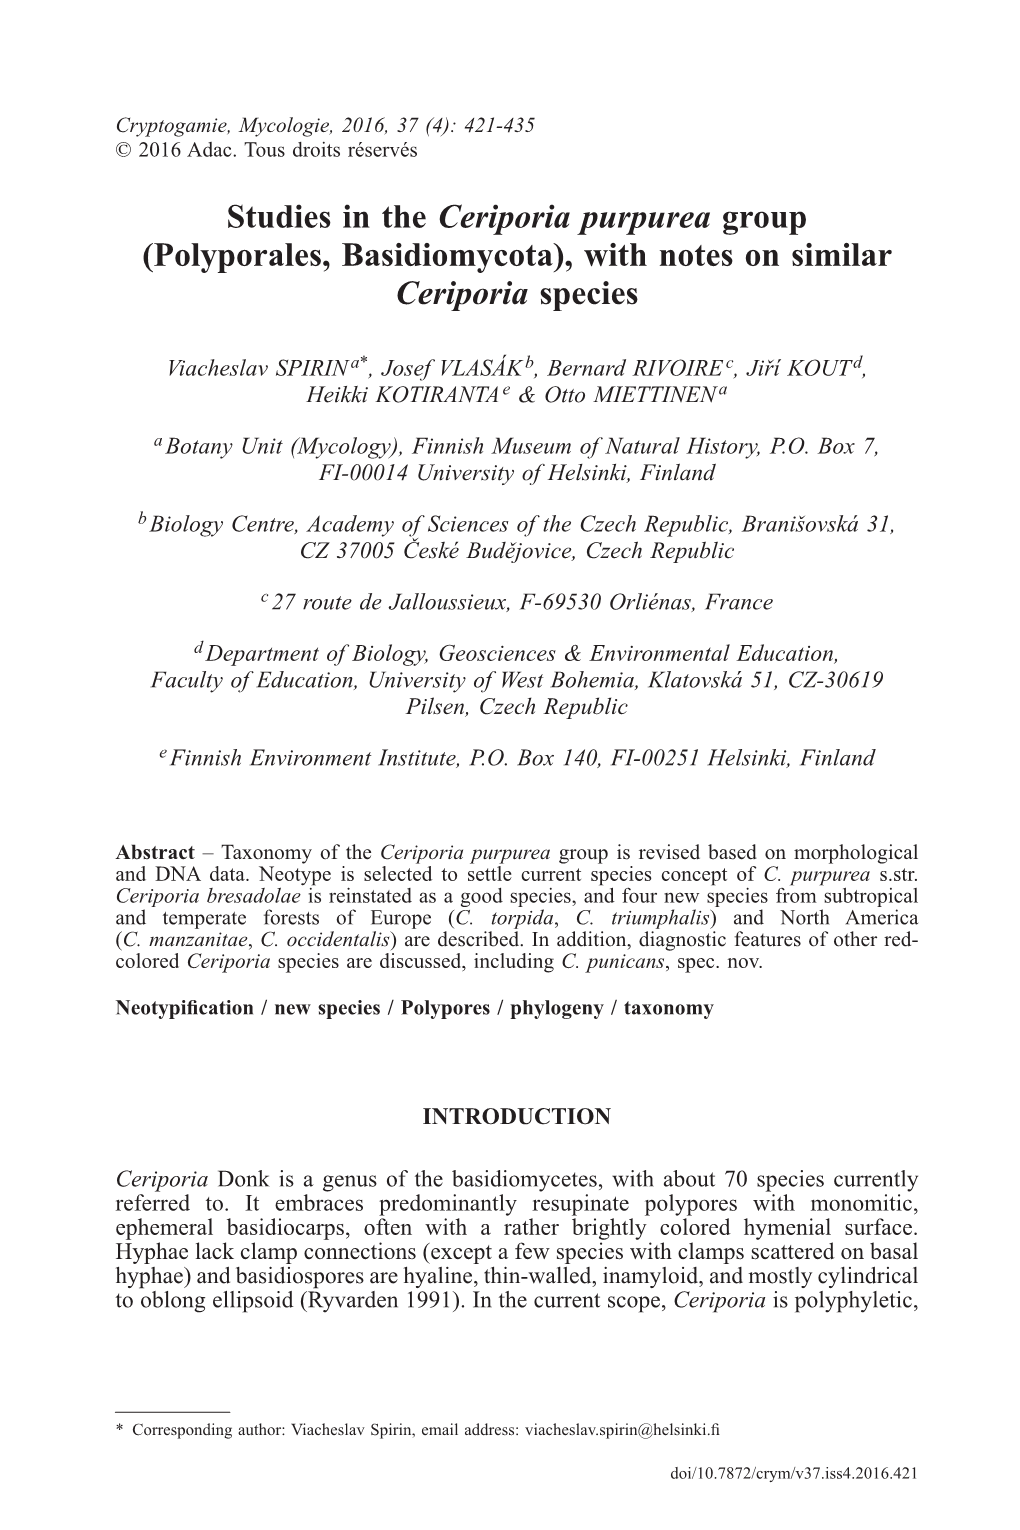 Studies in the Ceriporia Purpurea Group (Polyporales, Basidiomycota), with Notes on Similar Ceriporia Species